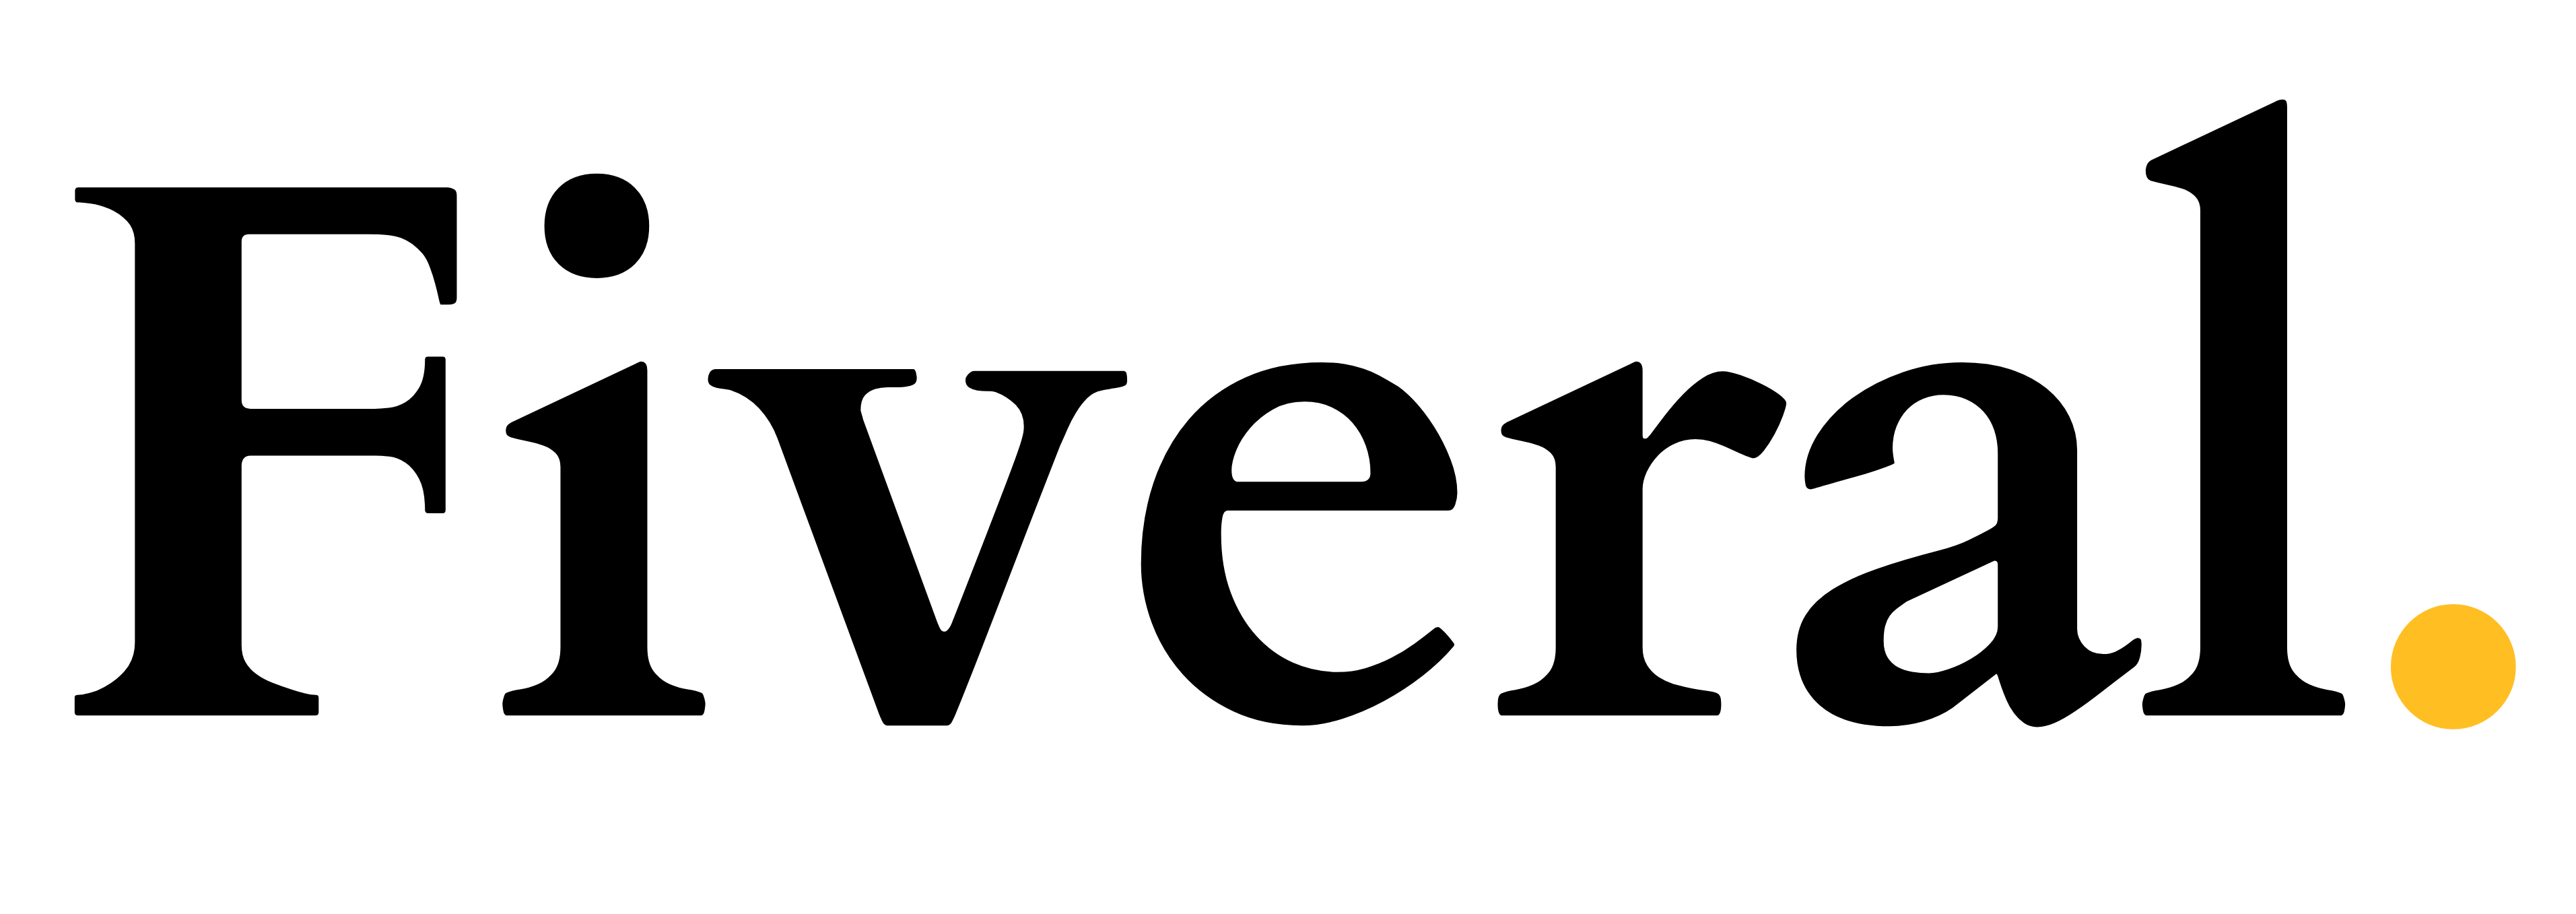 Fiveral logo